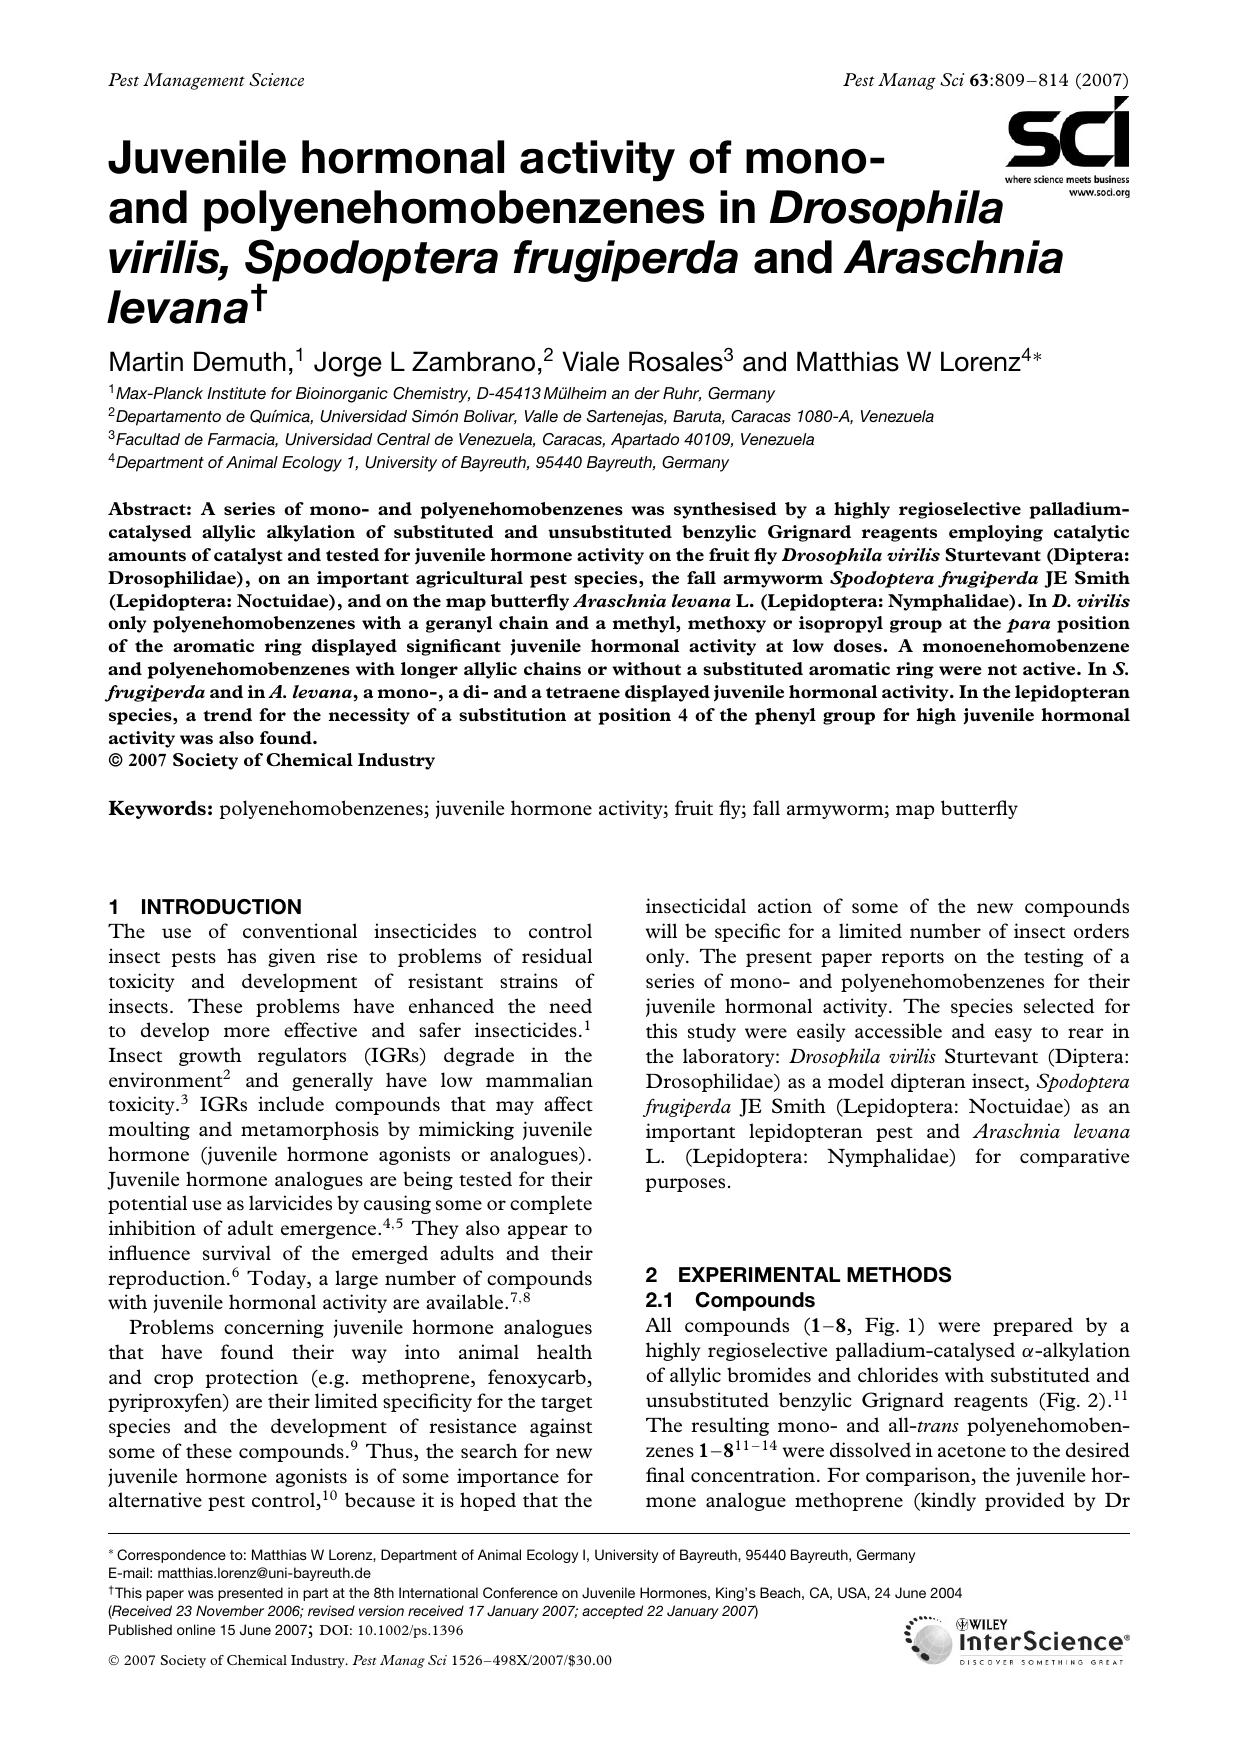 Juvenile hormonal activity of mono- and polyenehomobenzenes in Drosophila virilis, Spodoptera frugiperda and Araschnia levana by Unknown